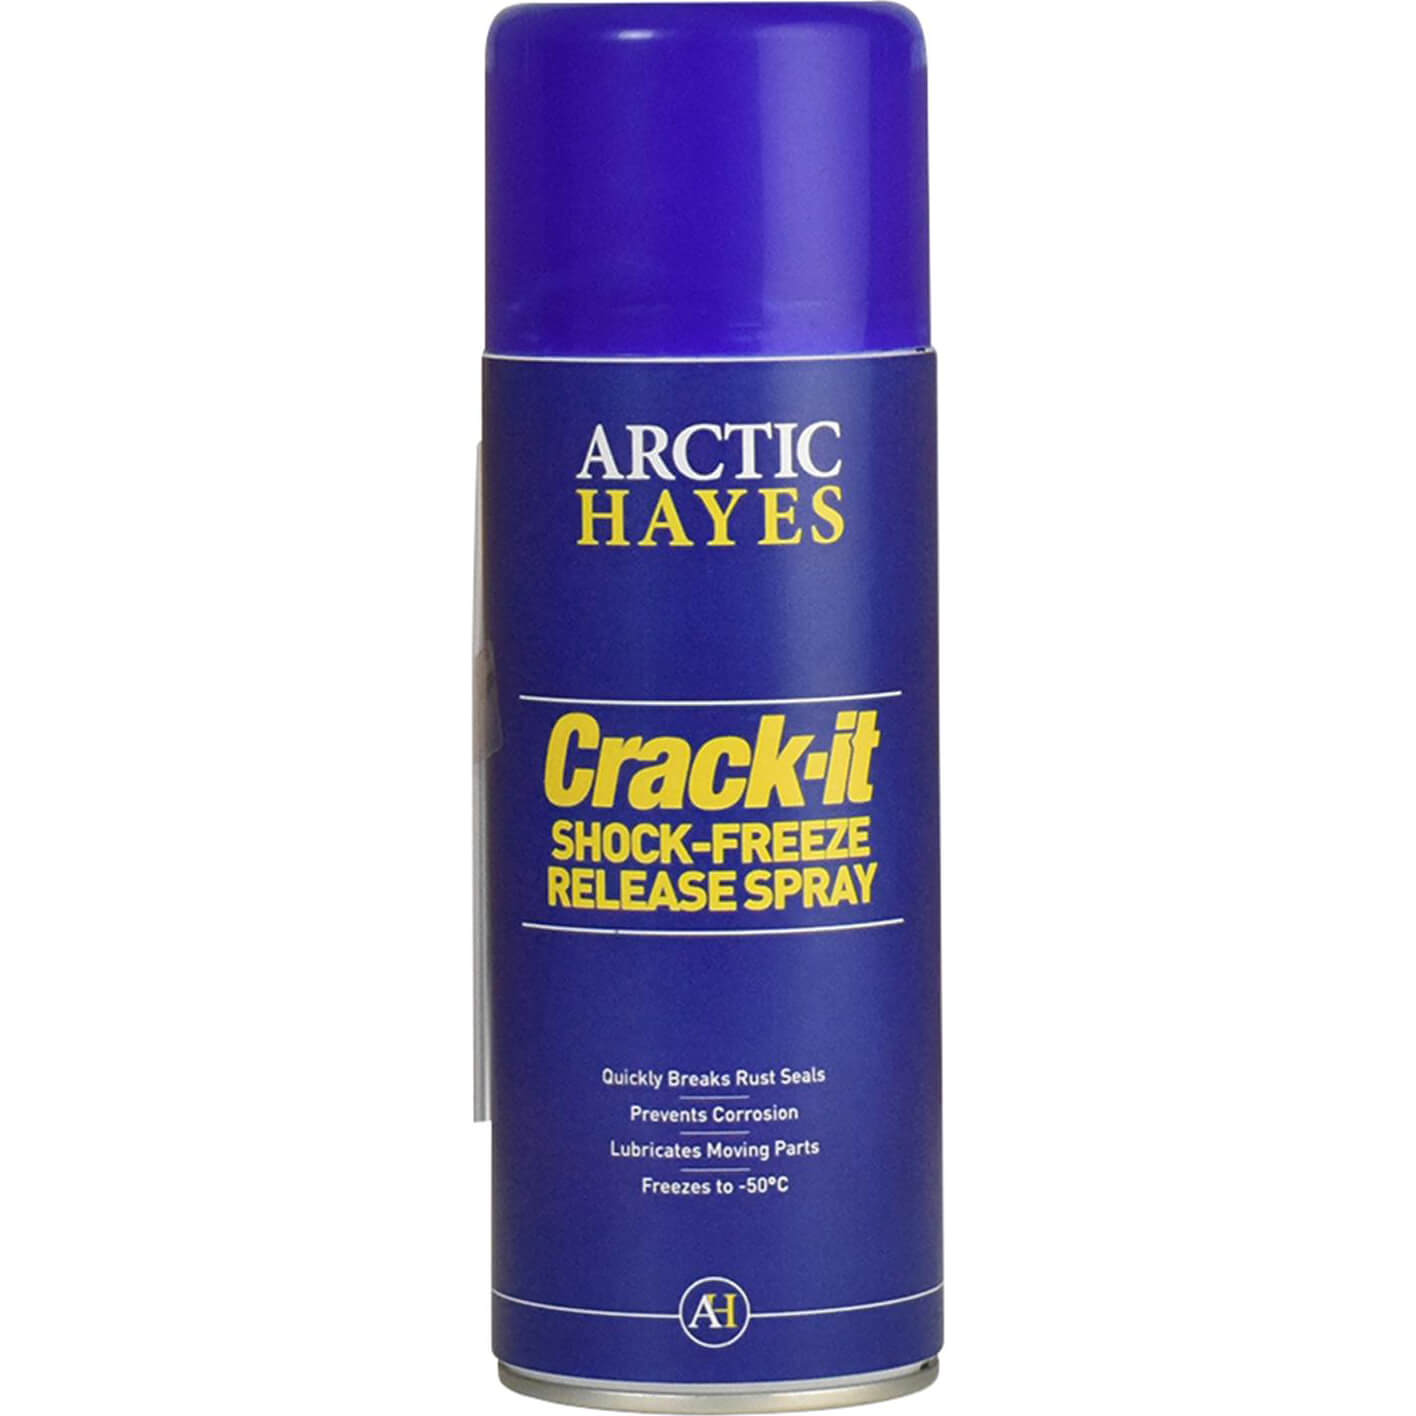 Image of Arctic Hayes Crack It Shock Freeze Release Spray 400ml